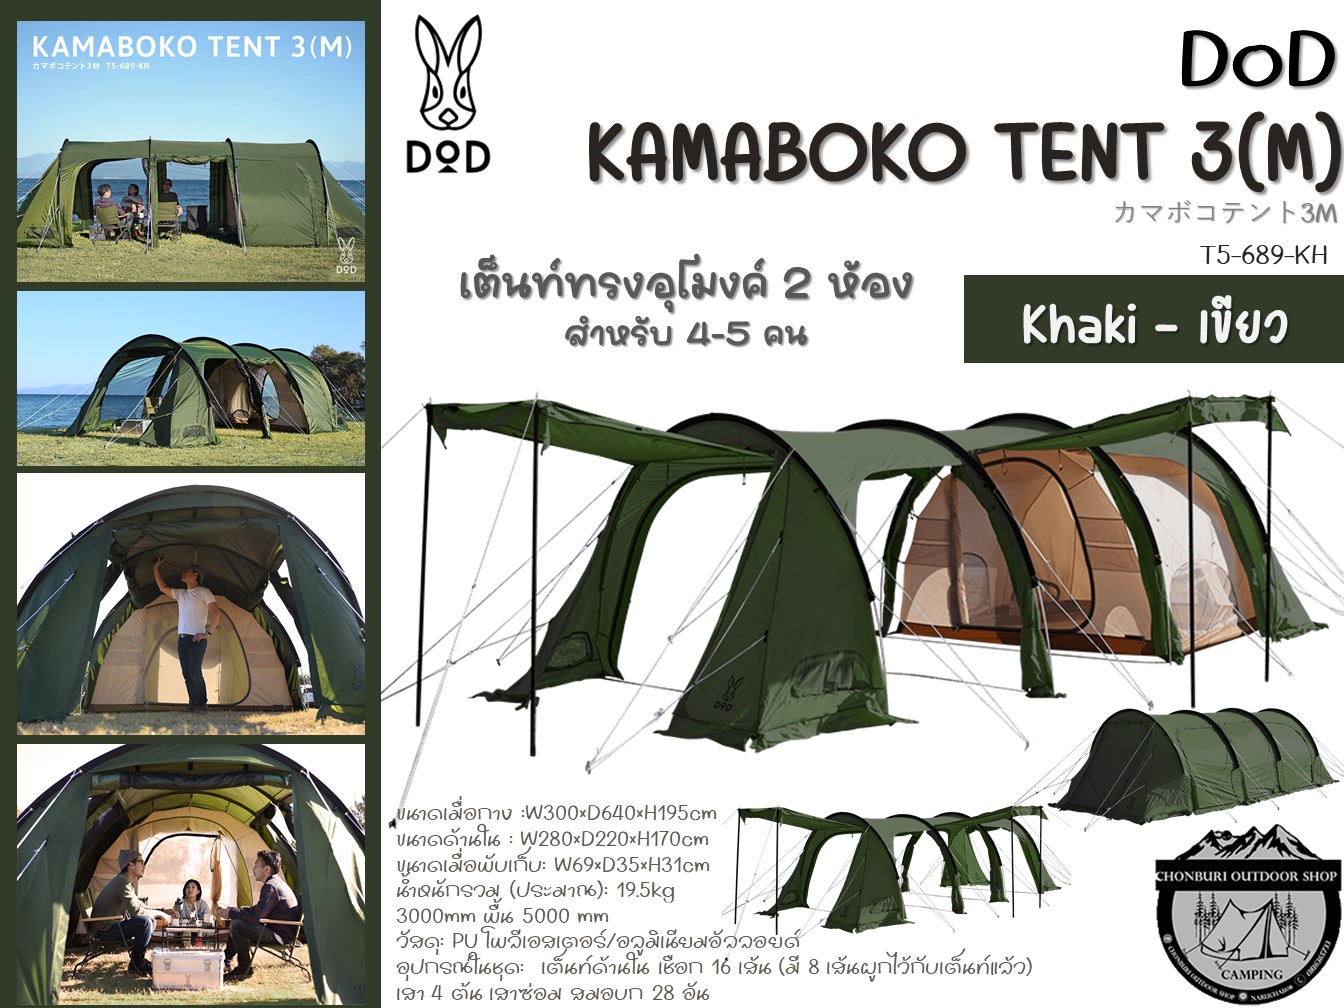 DoD KAMABOKO TENT 3 (M) Khaki#สีเขียวนอน 5 คน | Lazada.co.th